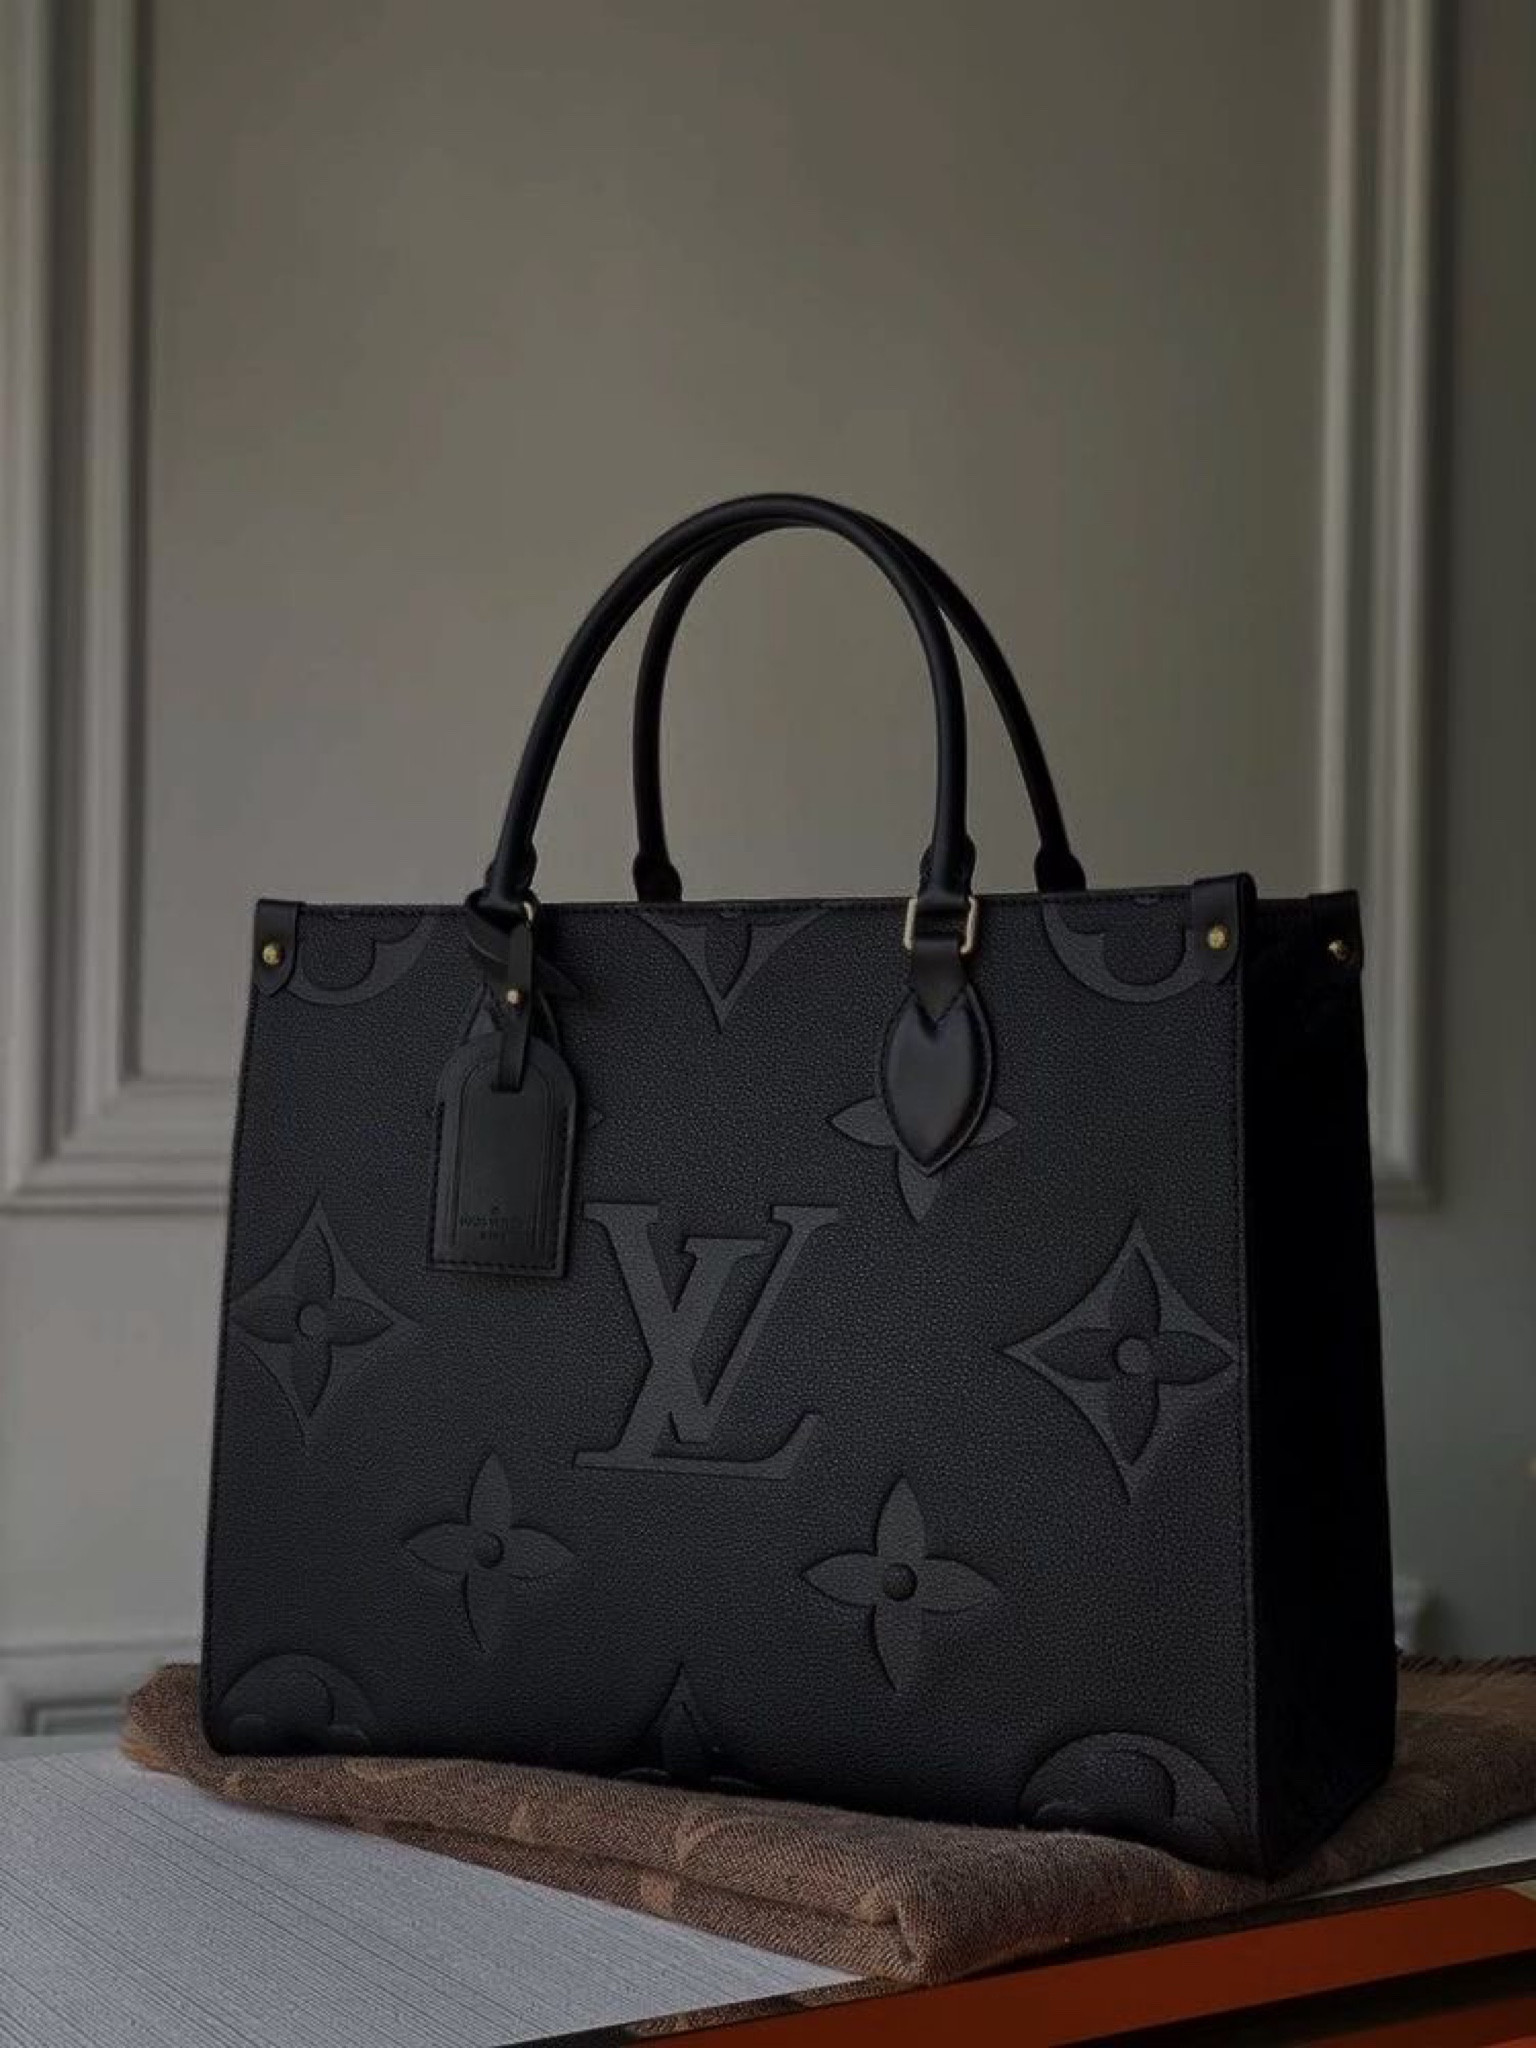 hkadavy's Louis Vuitton Gift Guide on LTK